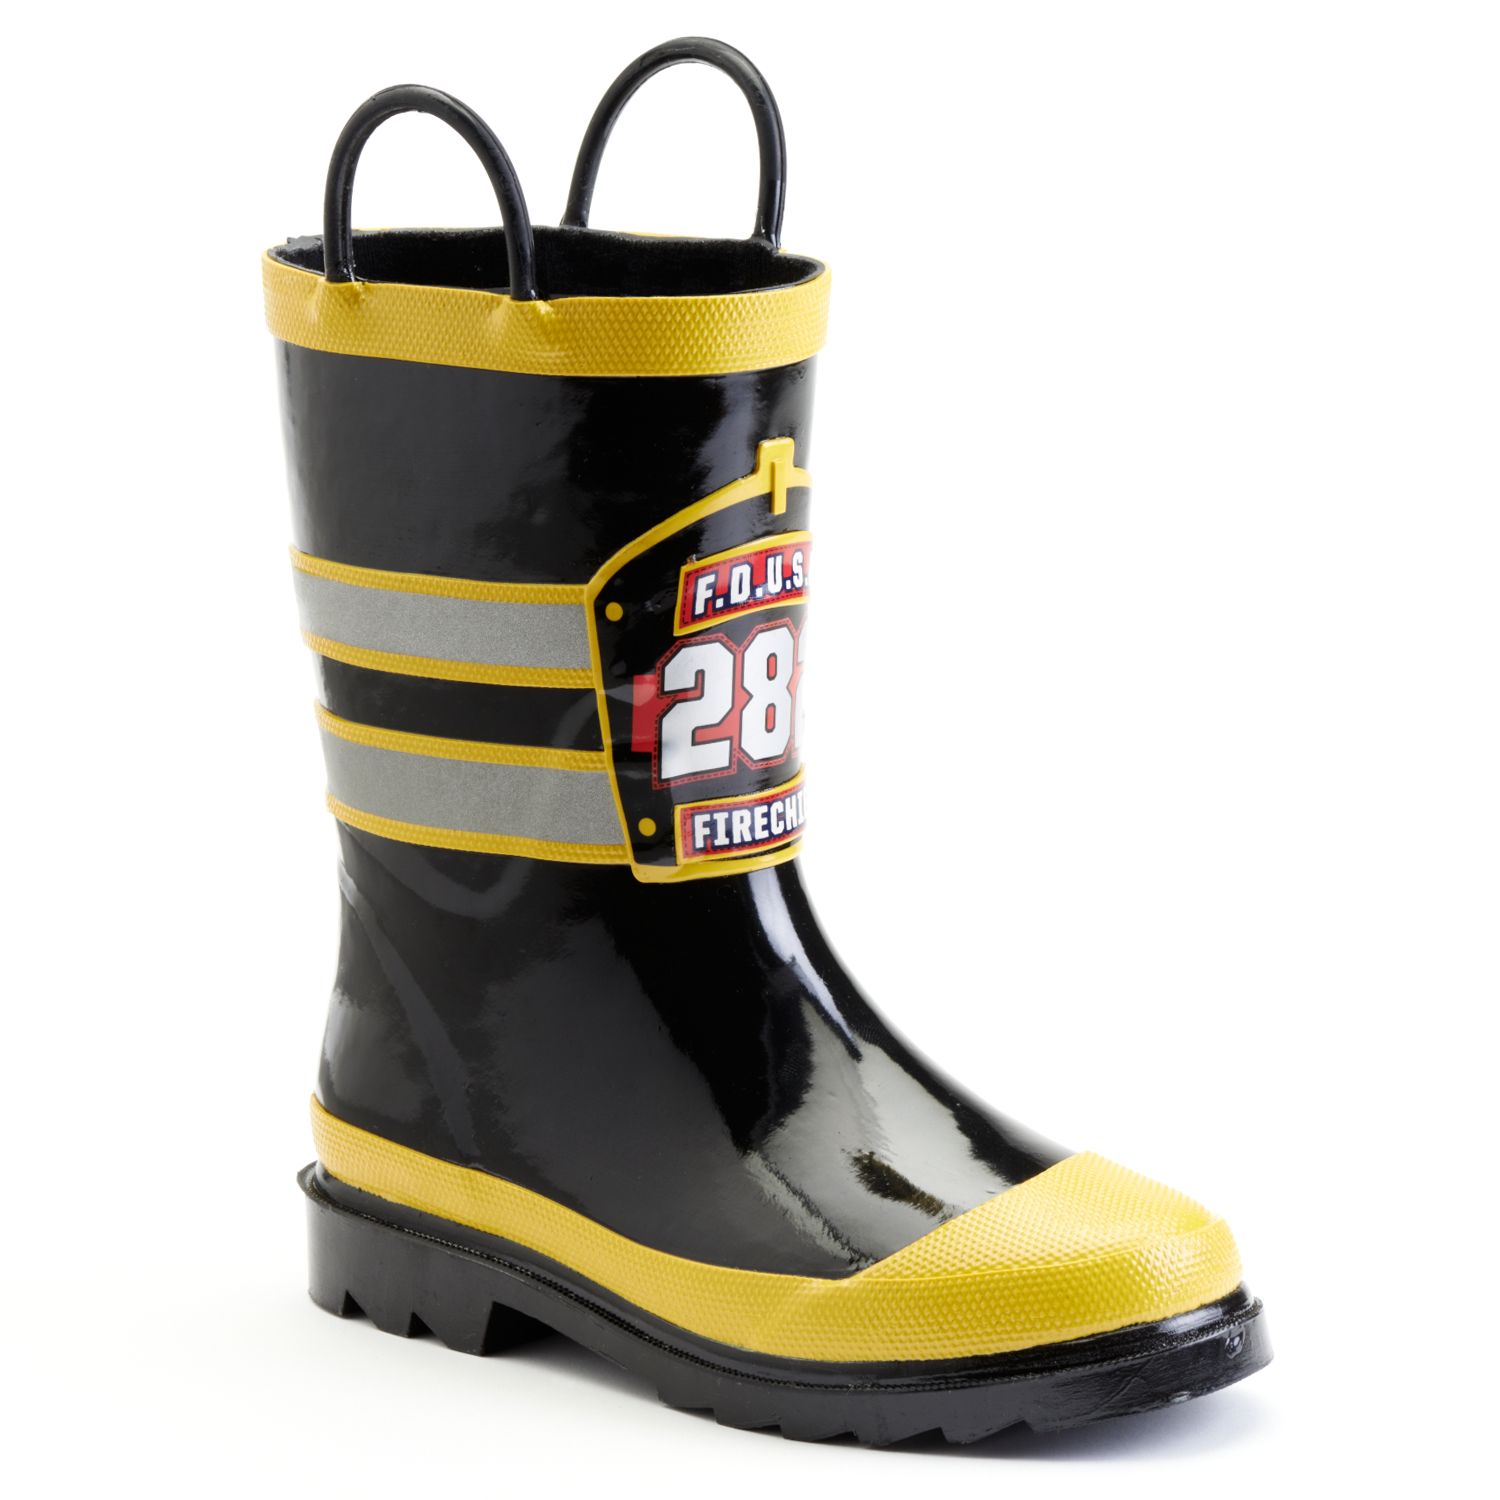 kohl's rain boots